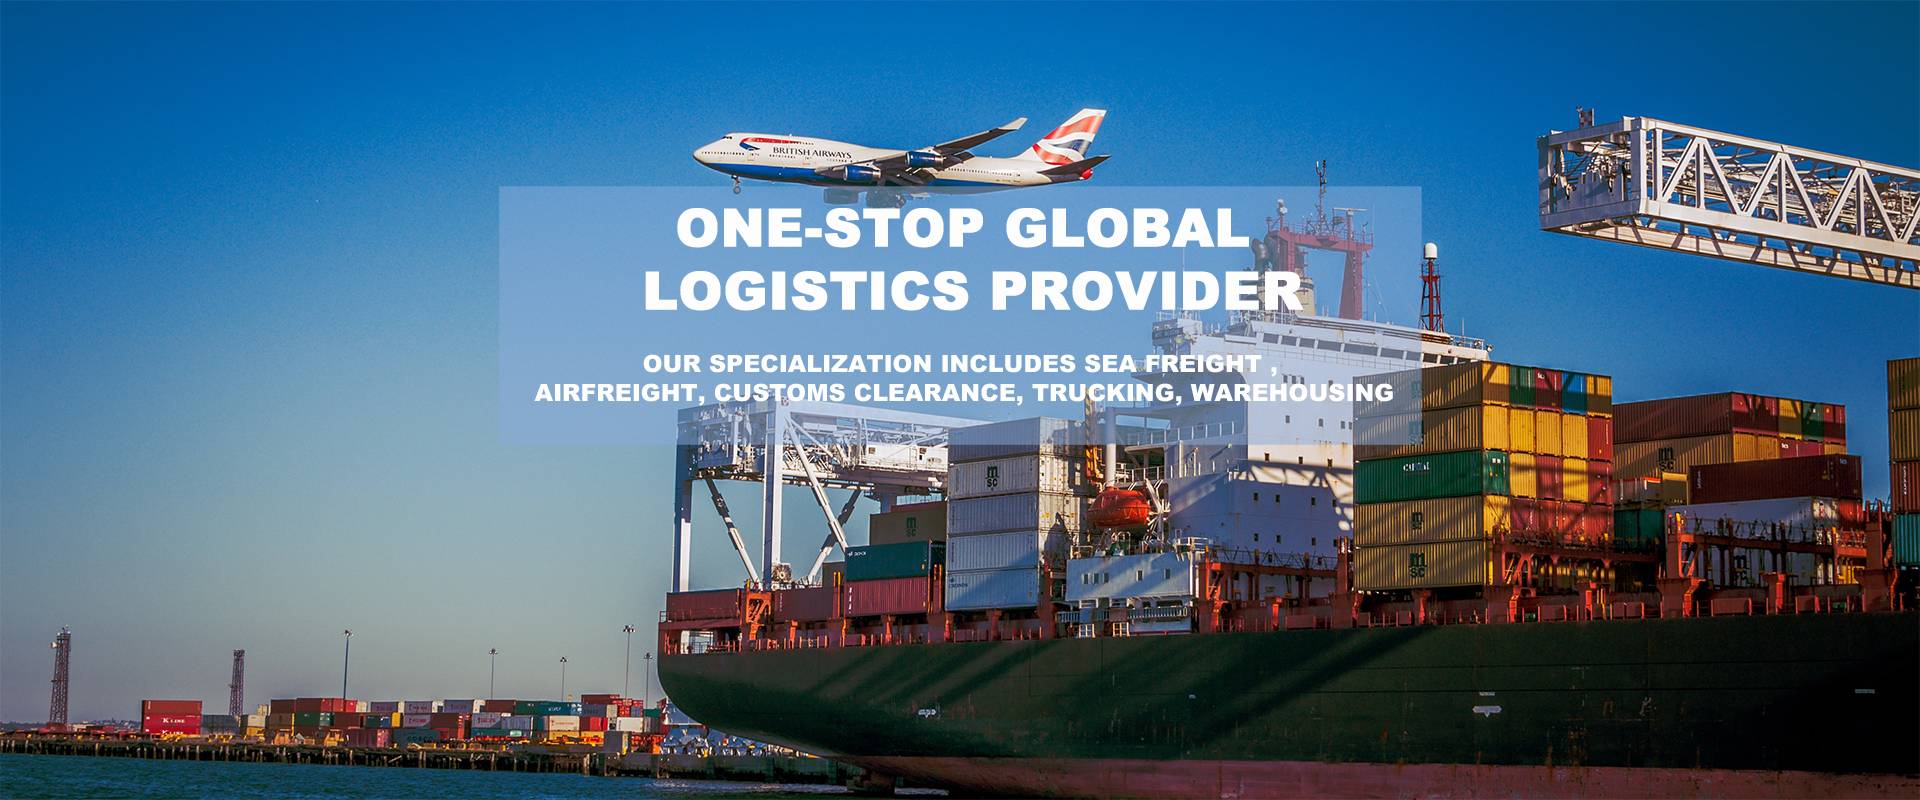 one-stop global logistics provider